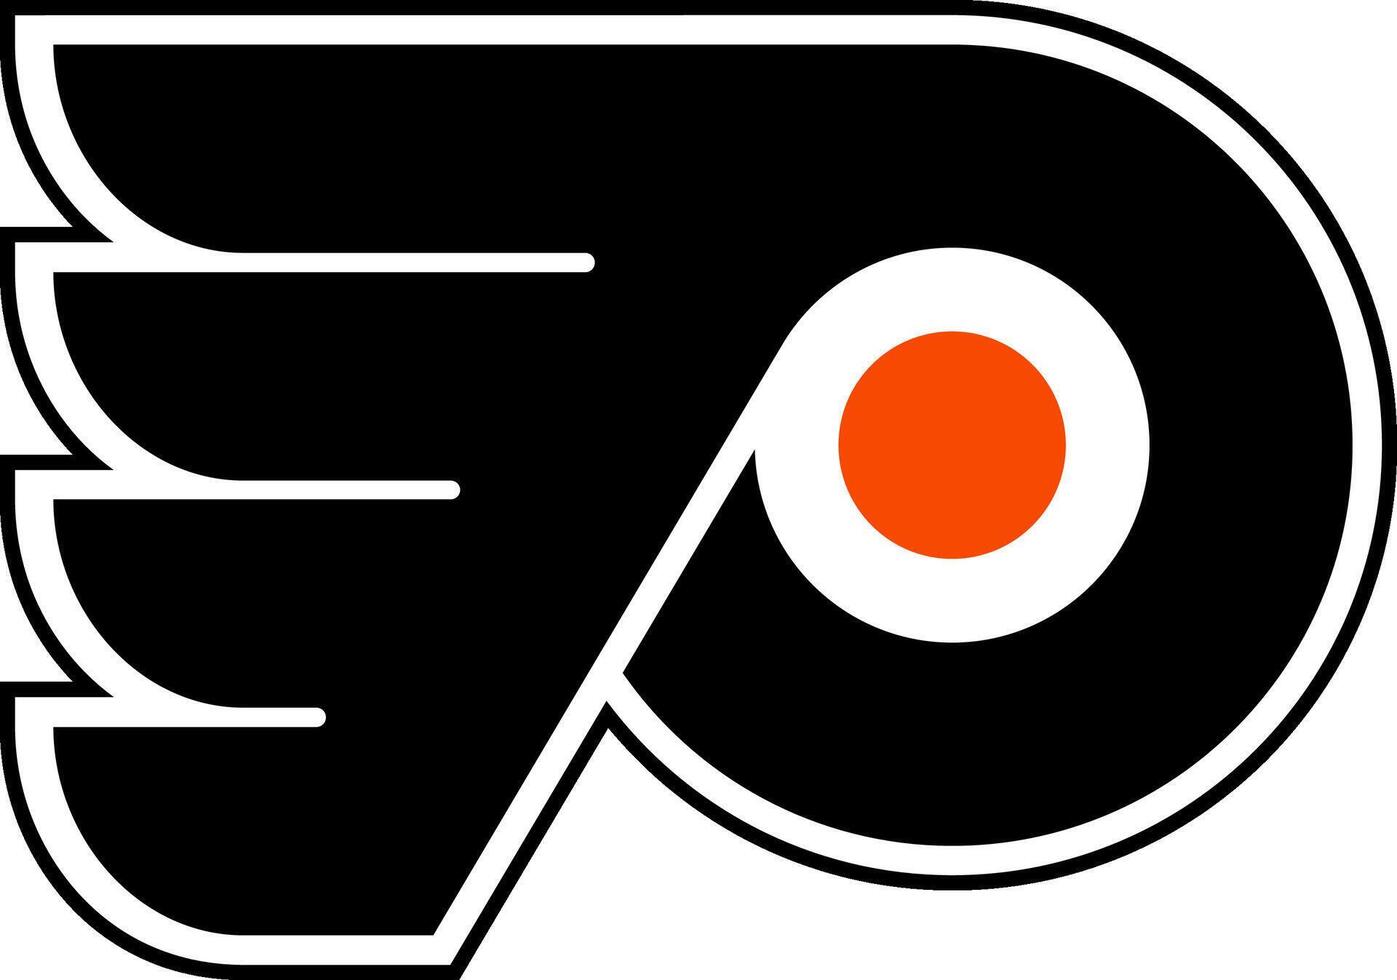 logo van de Philadelphia flyers nationaal hockey liga team vector